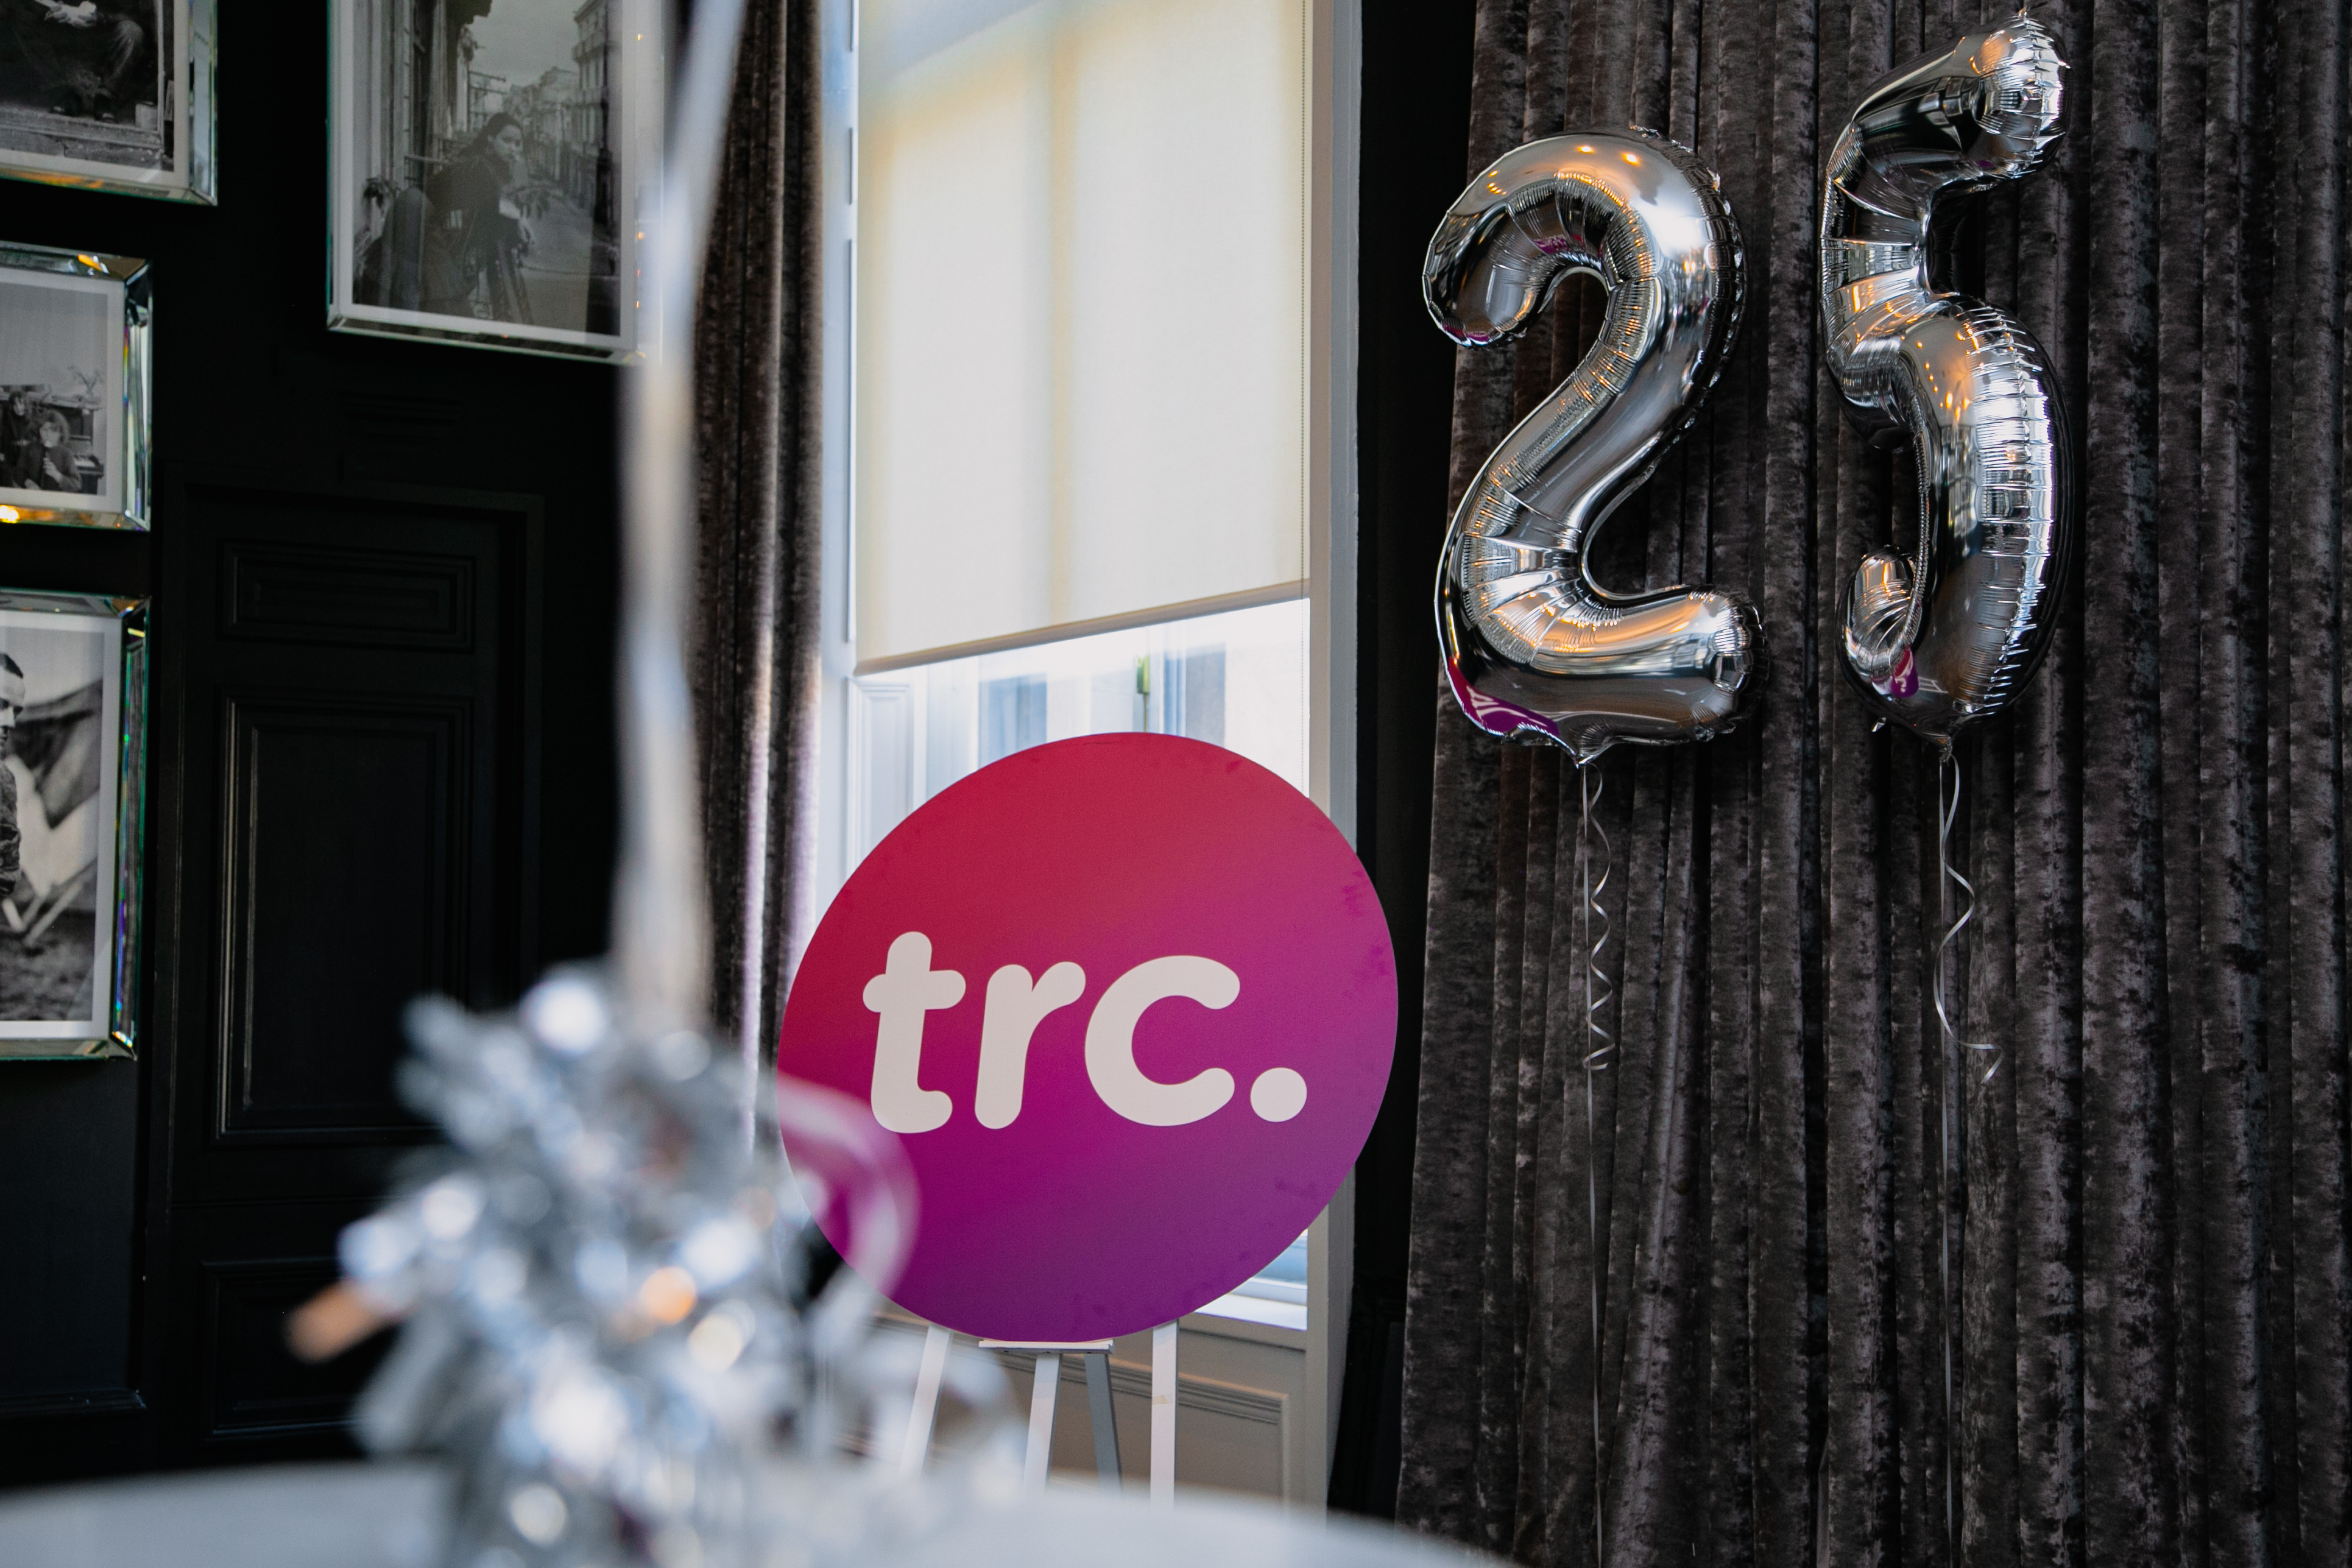 TRC logo and 25 balloons